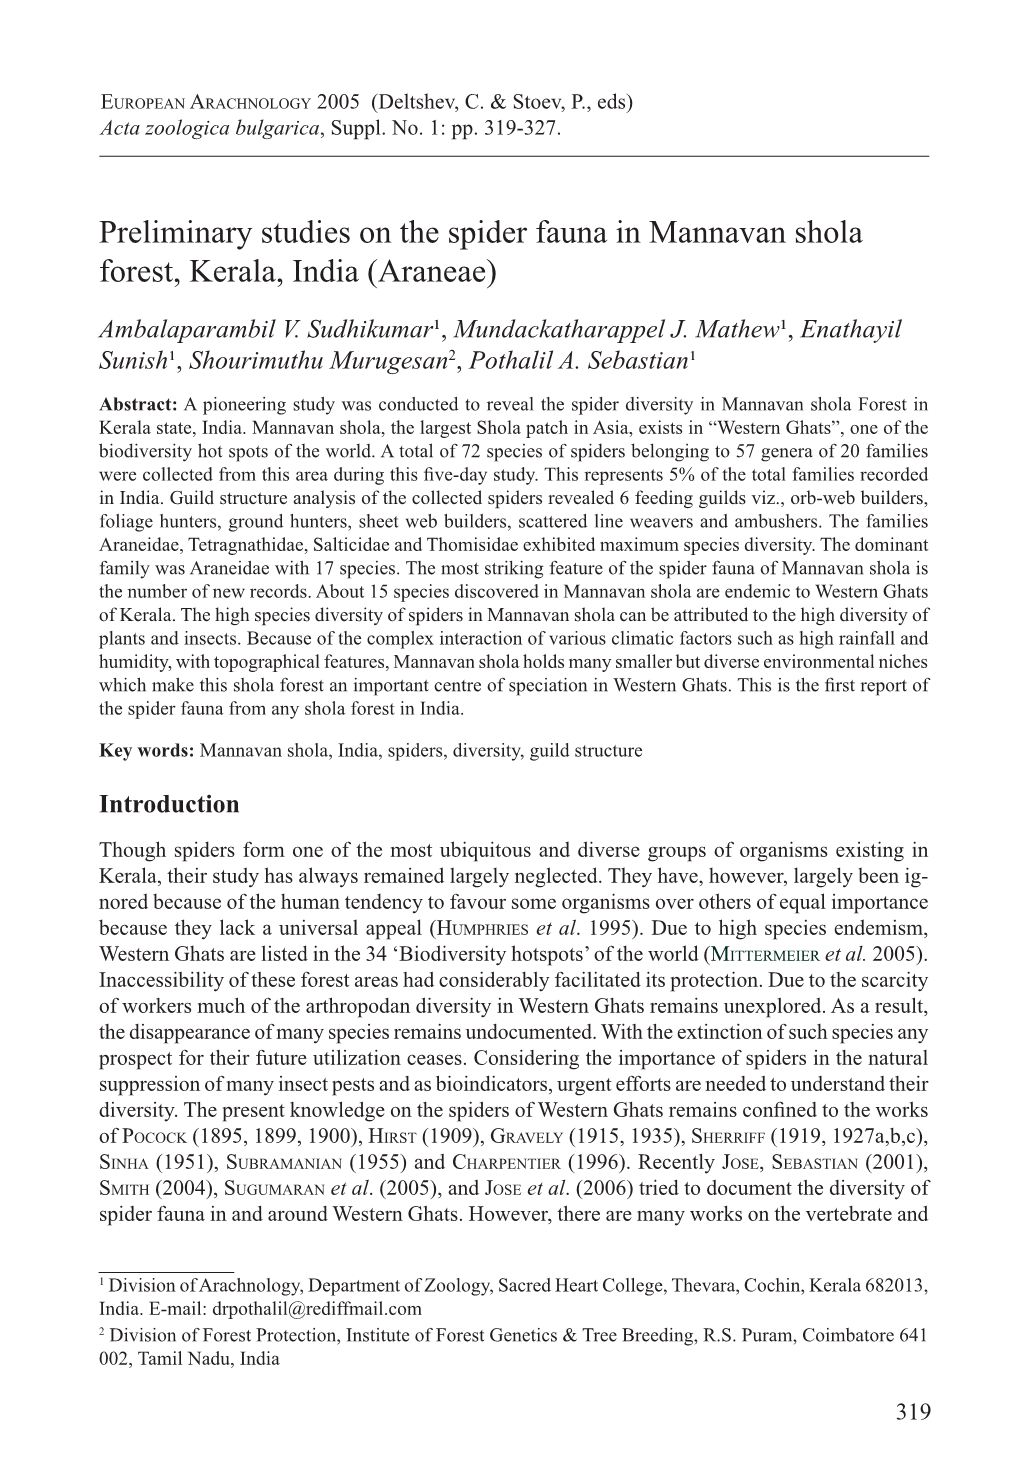 Preliminary Studies on the Spider Fauna in Mannavan Shola Forest, Kerala, India (Araneae)